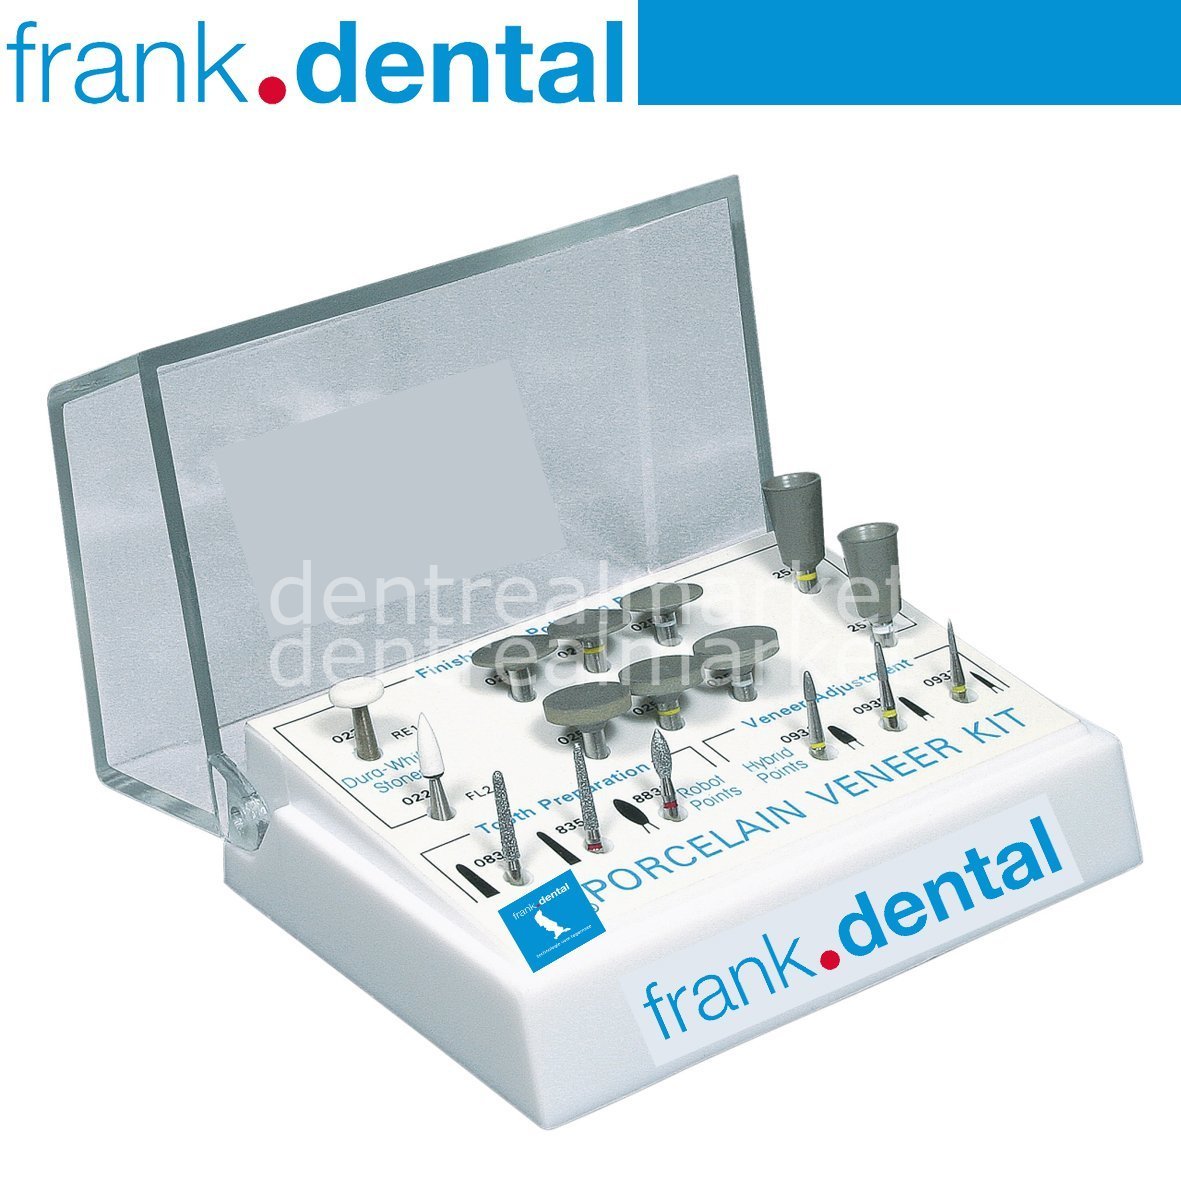 DentrealStore - Frank Dental Laminate Veneer Finishing and Polishing